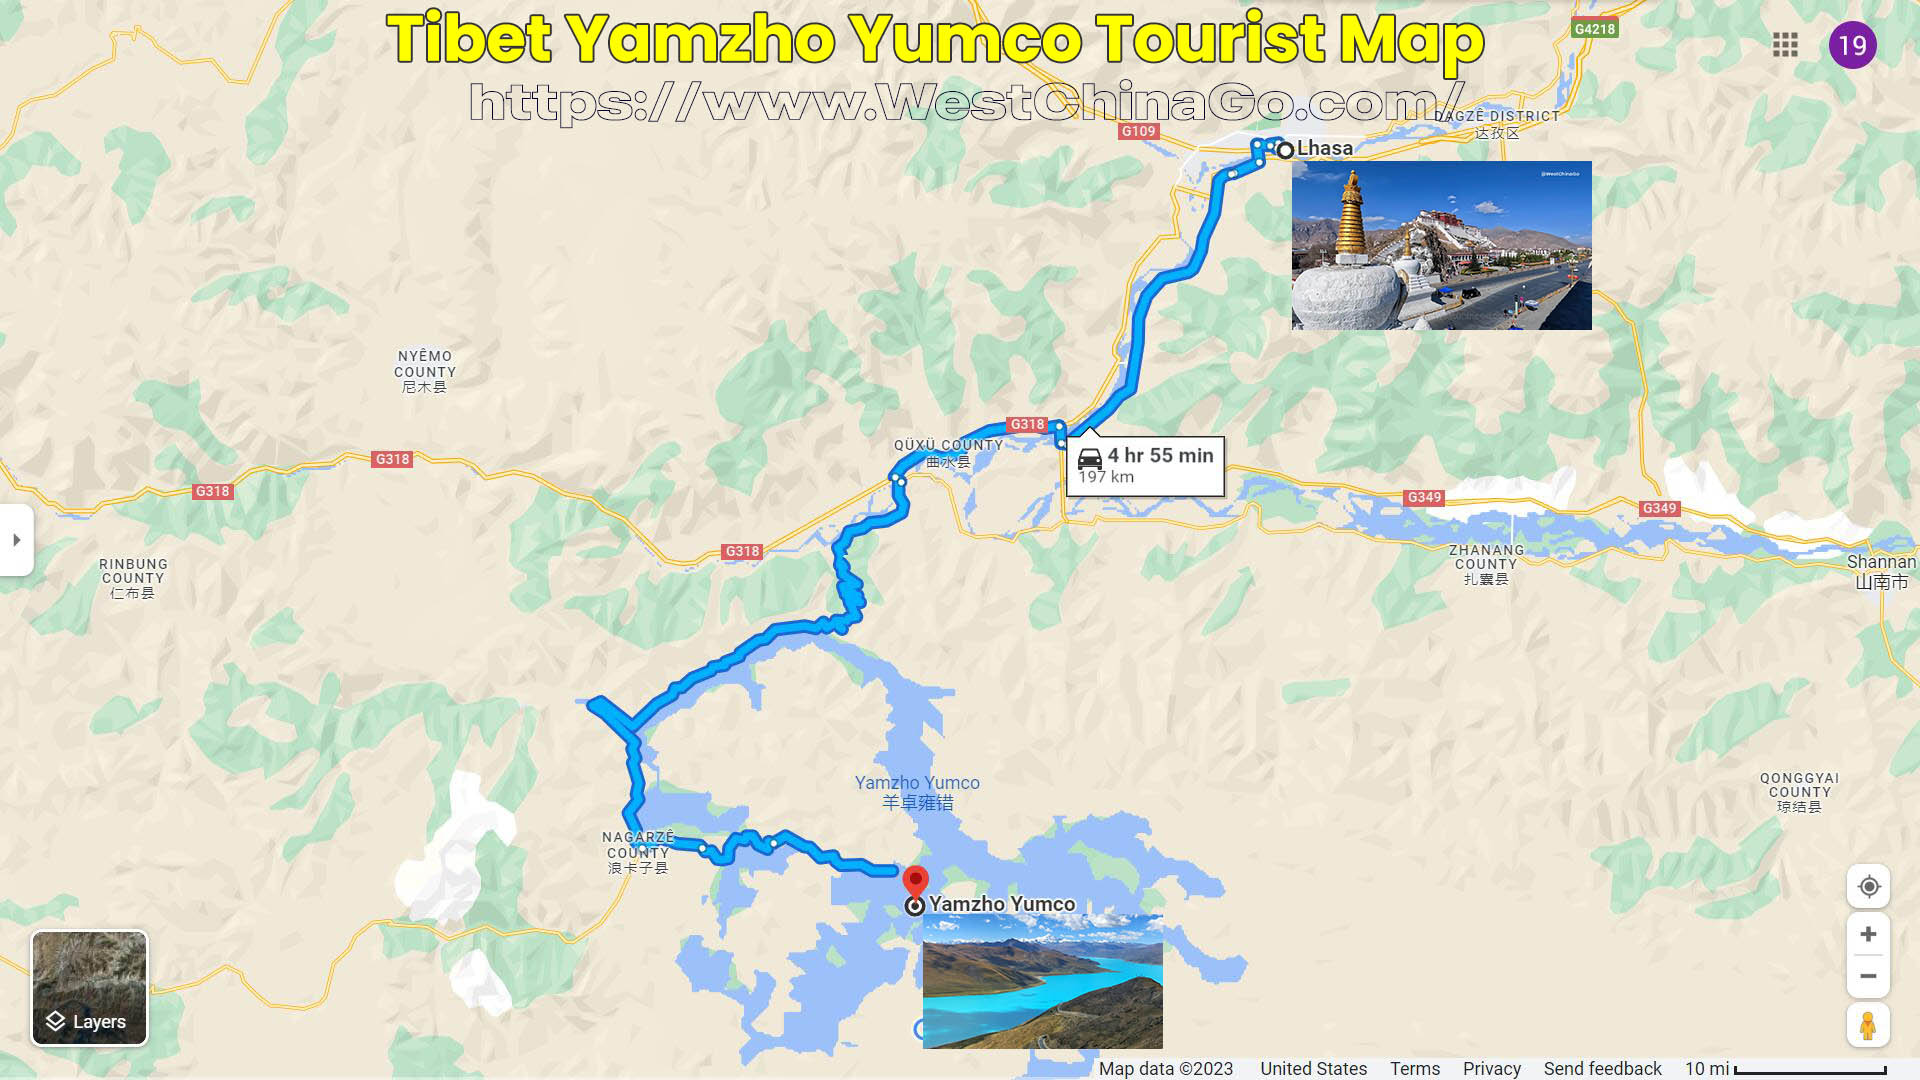 Tibet Yamzho Yumco Tourist Map